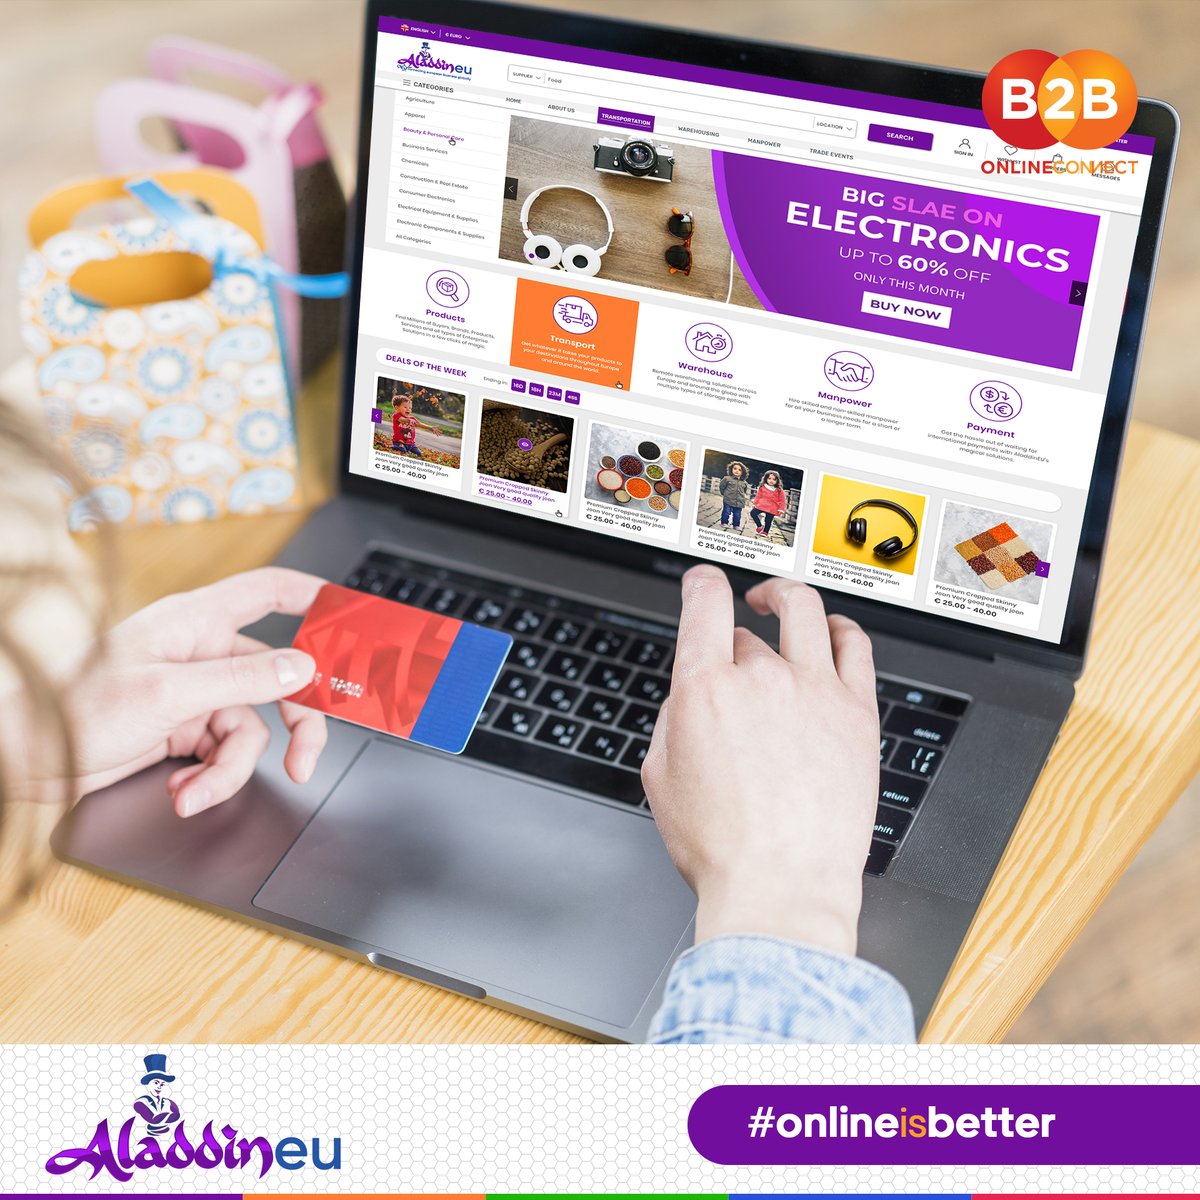 Register At Aladdineu Now And Connect With Thousands Of Buyers Online.
-
👉👉👉aladdineu.com
-
-
#aladdineu #aladdineub2b #purplemagic #b2b #b2bmarketing #b2bplatform #sales #b2bagency #businessexpo #europe #italy